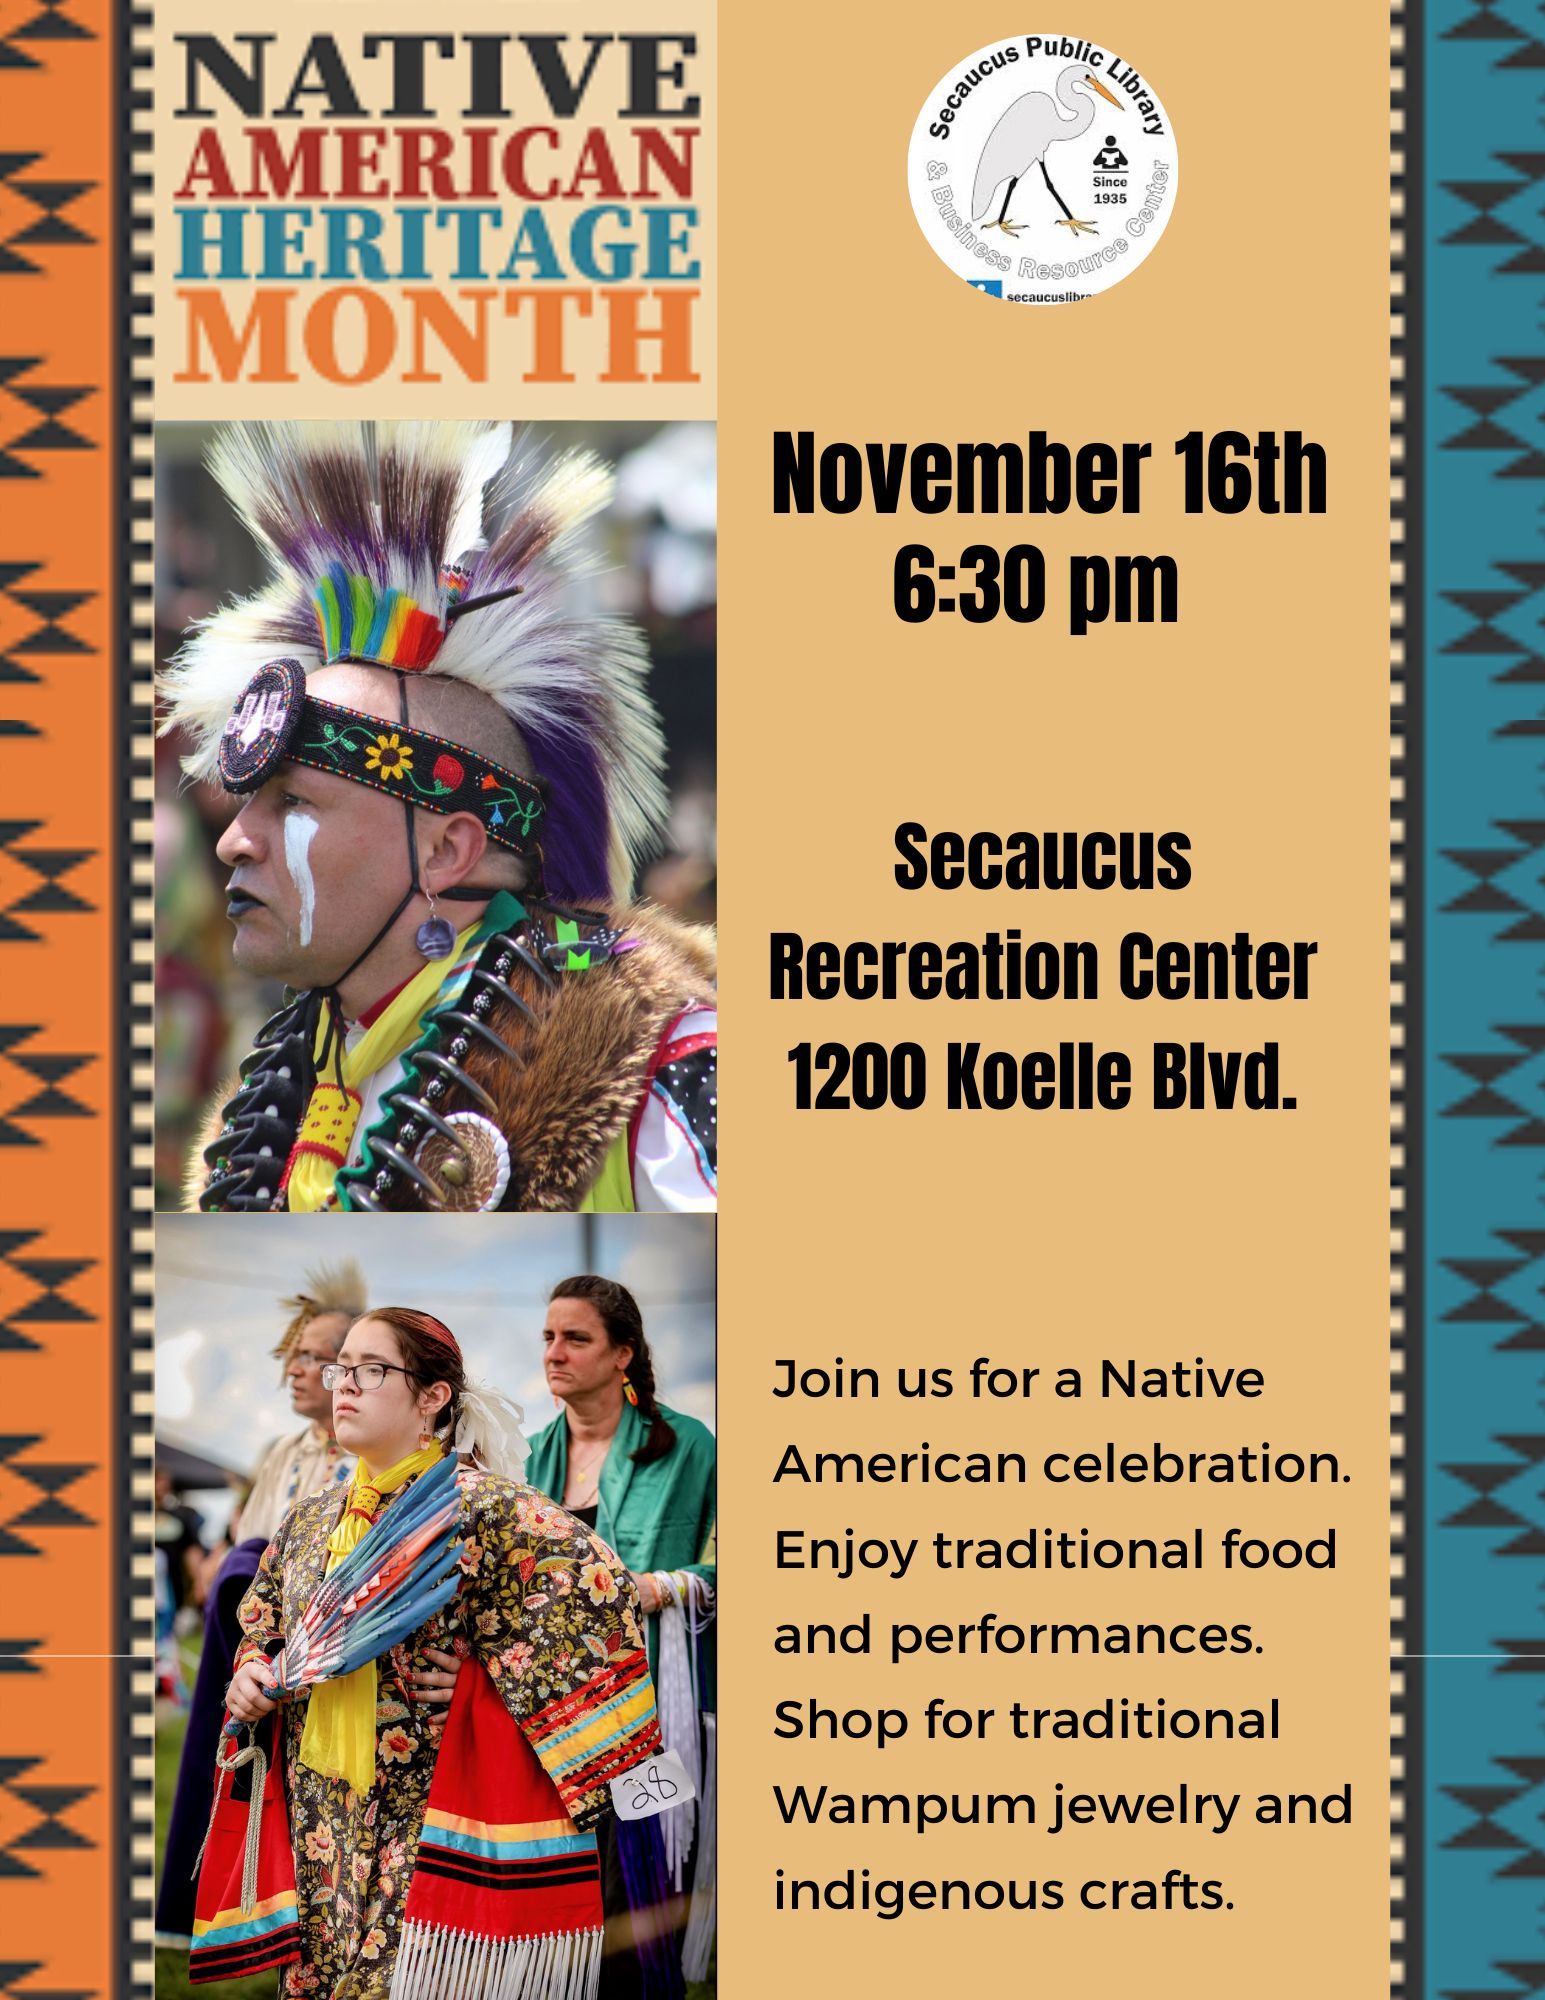 NATIVE AMERICAN heritage month celebration flyer